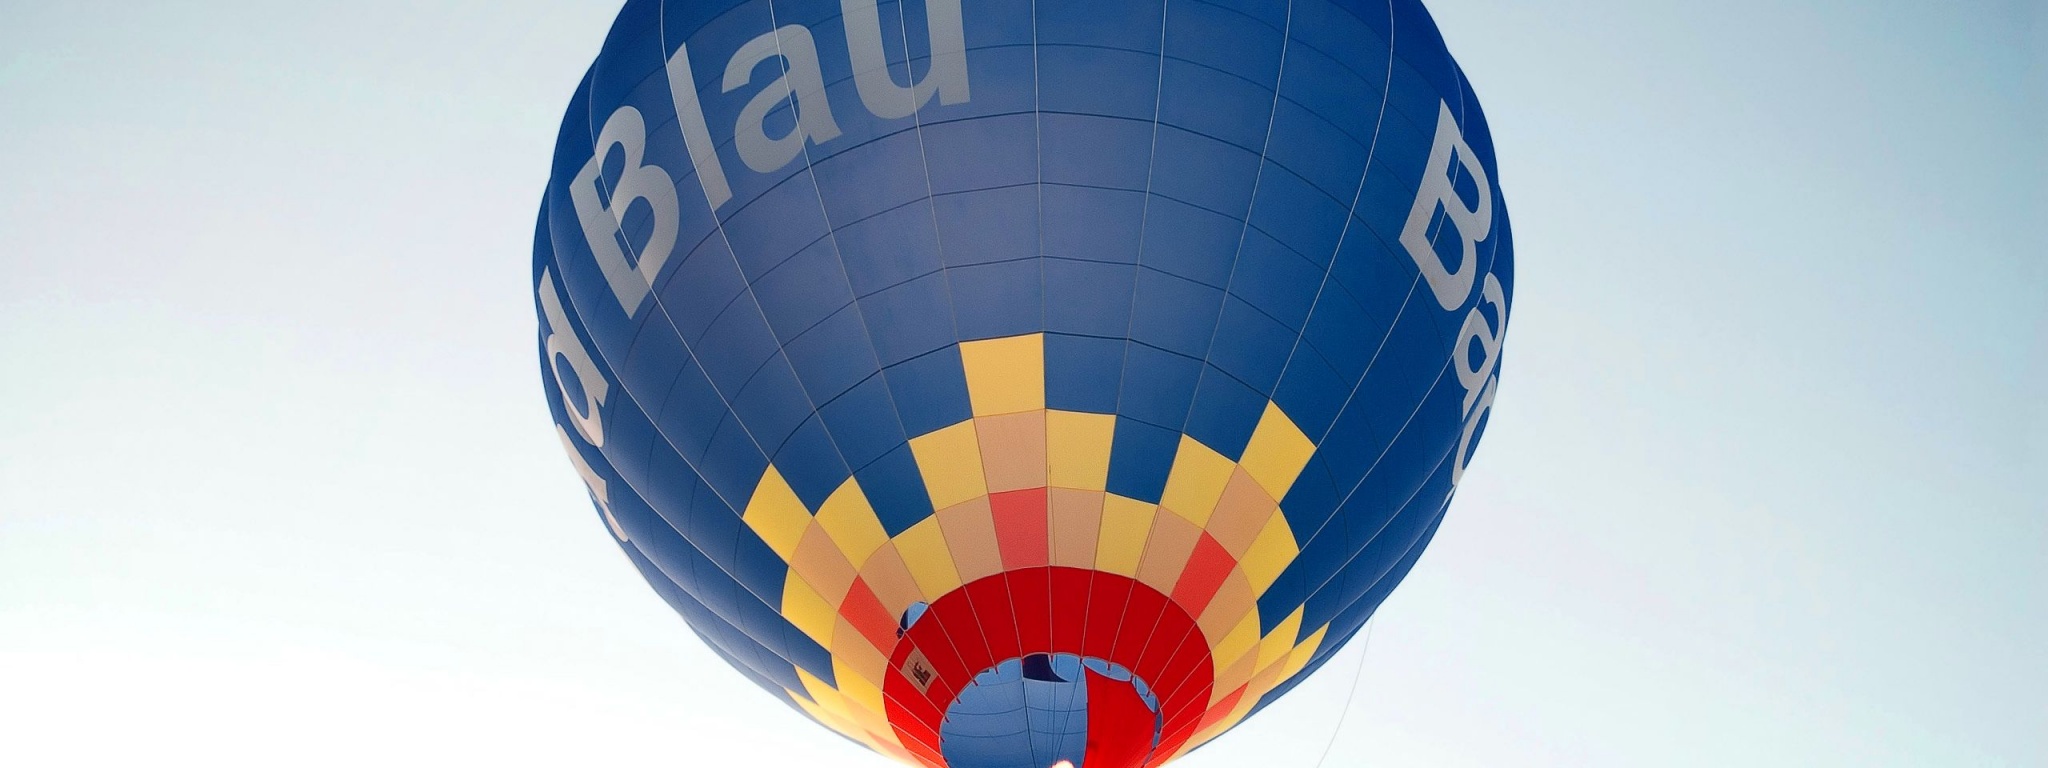 Sky Balloon Blue